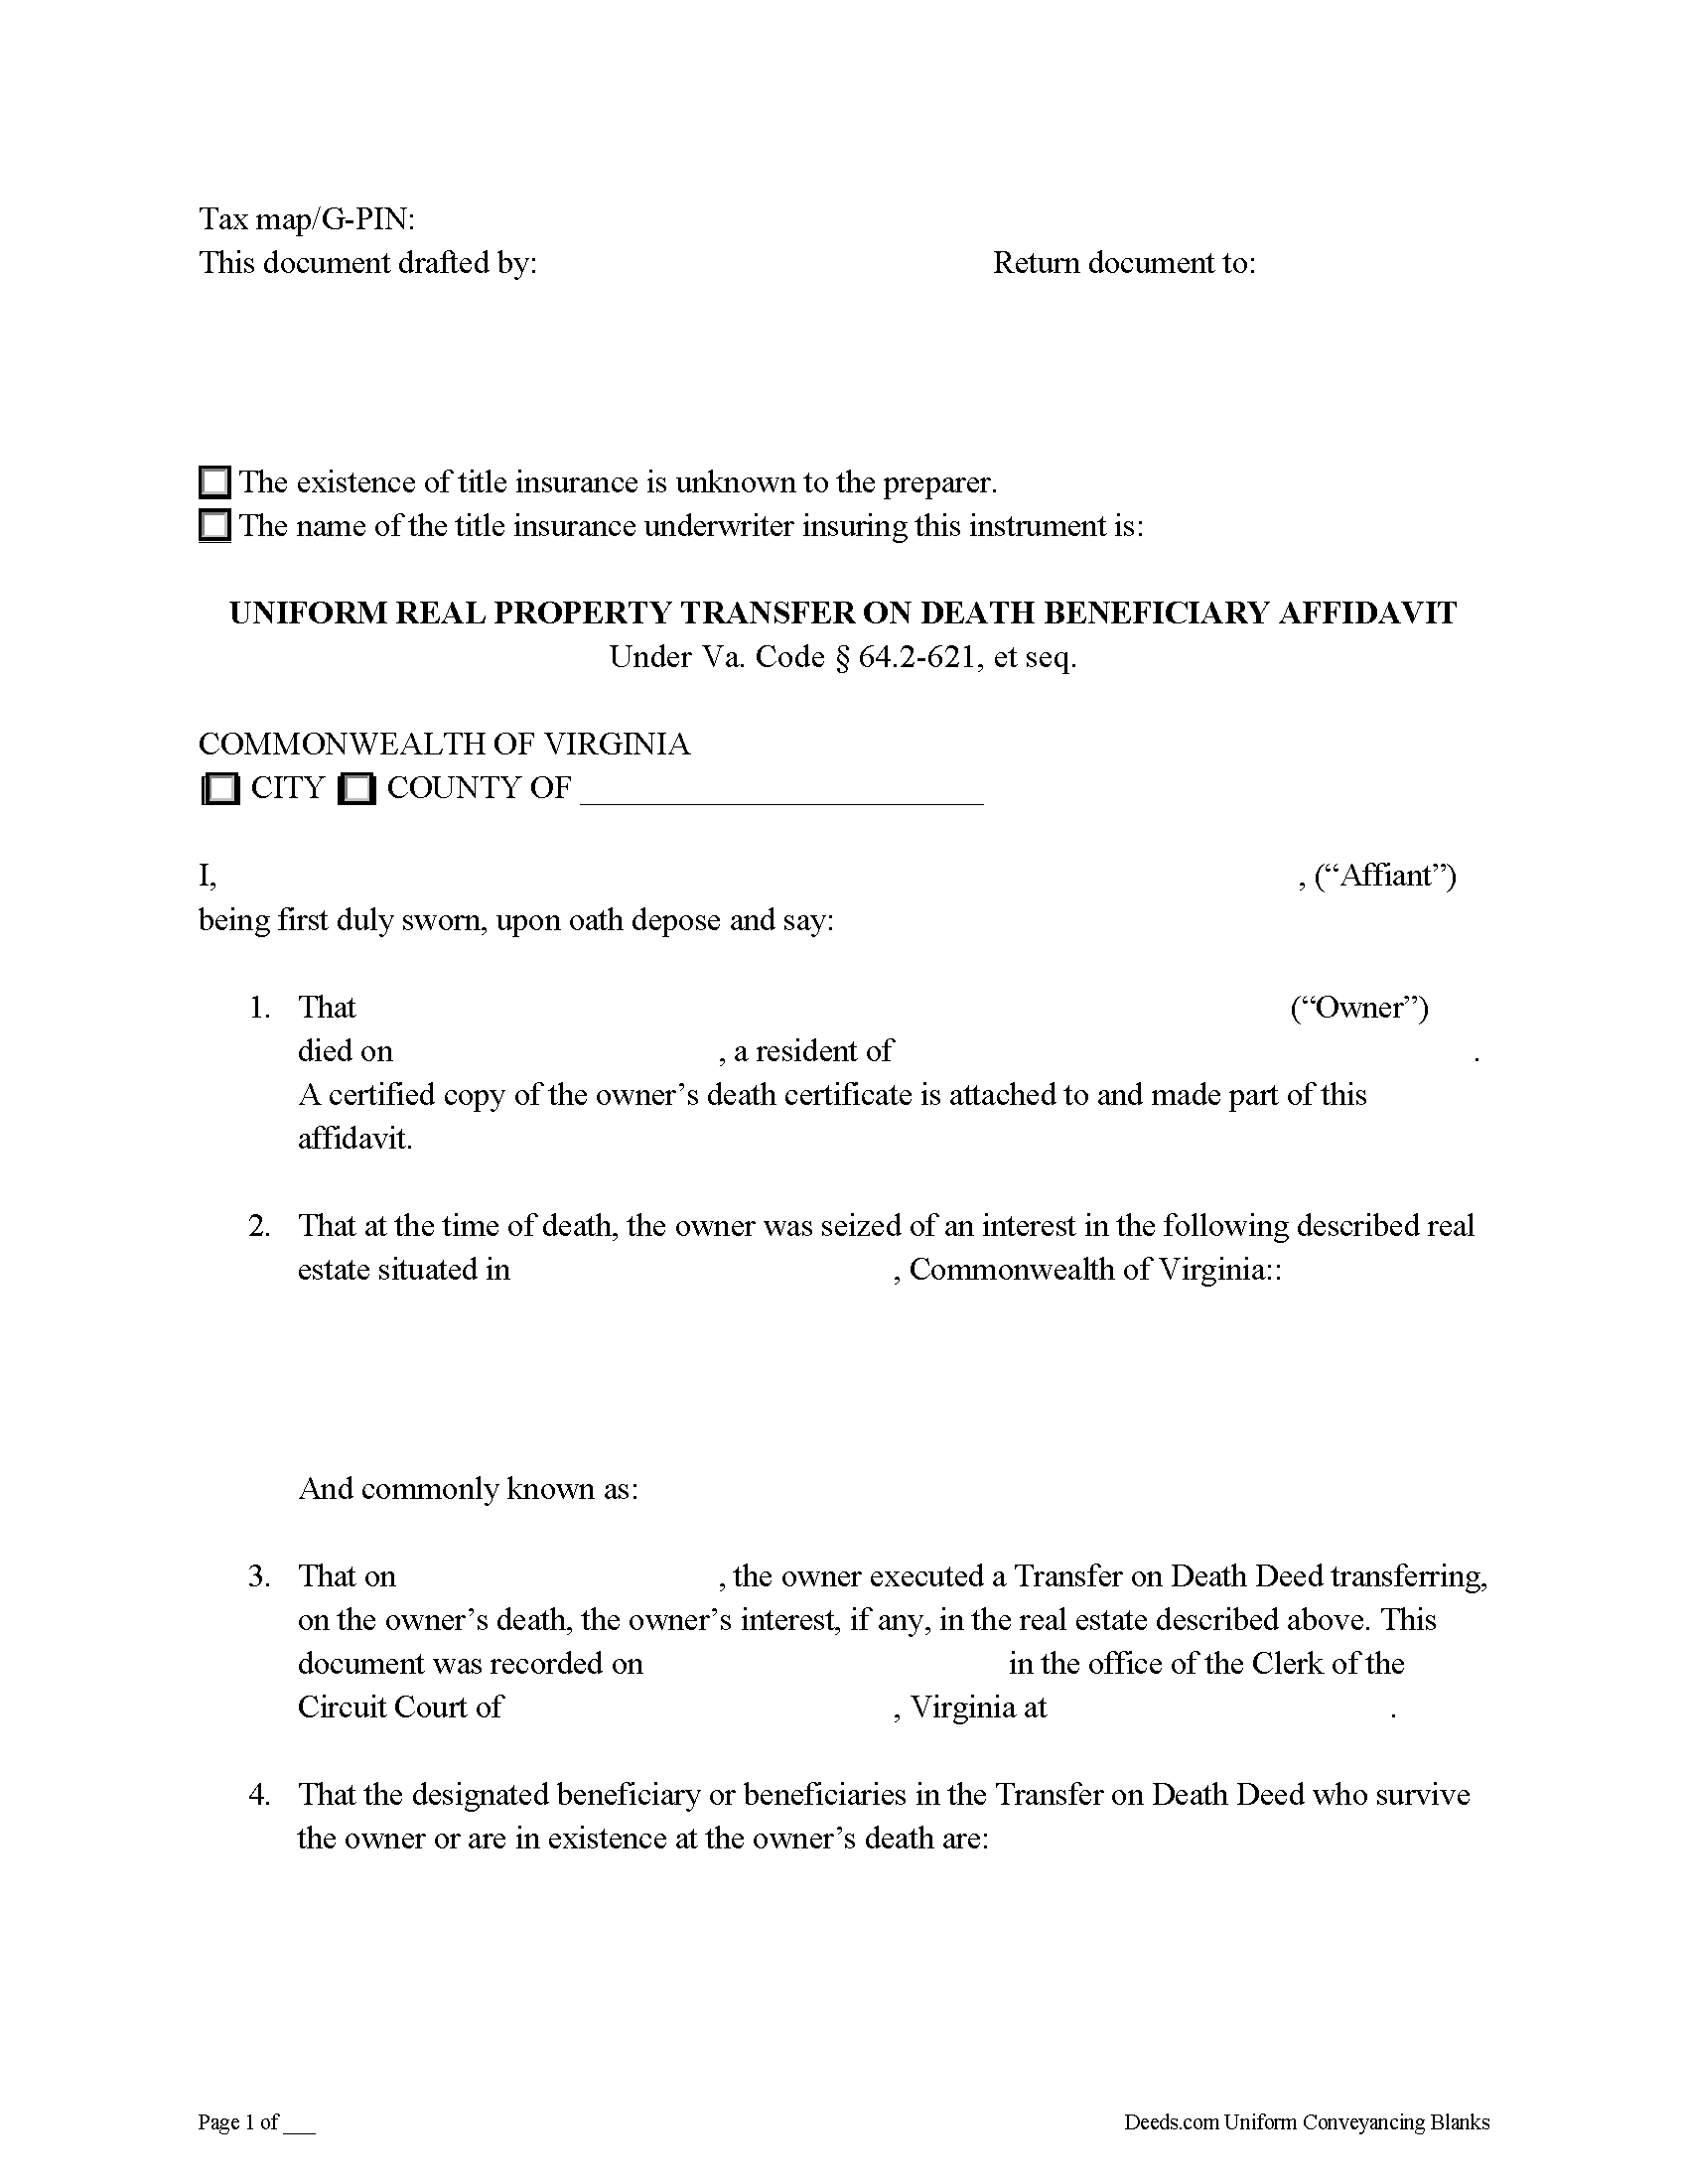 Virginia Transfer on Death Beneficiary Affidavit Image